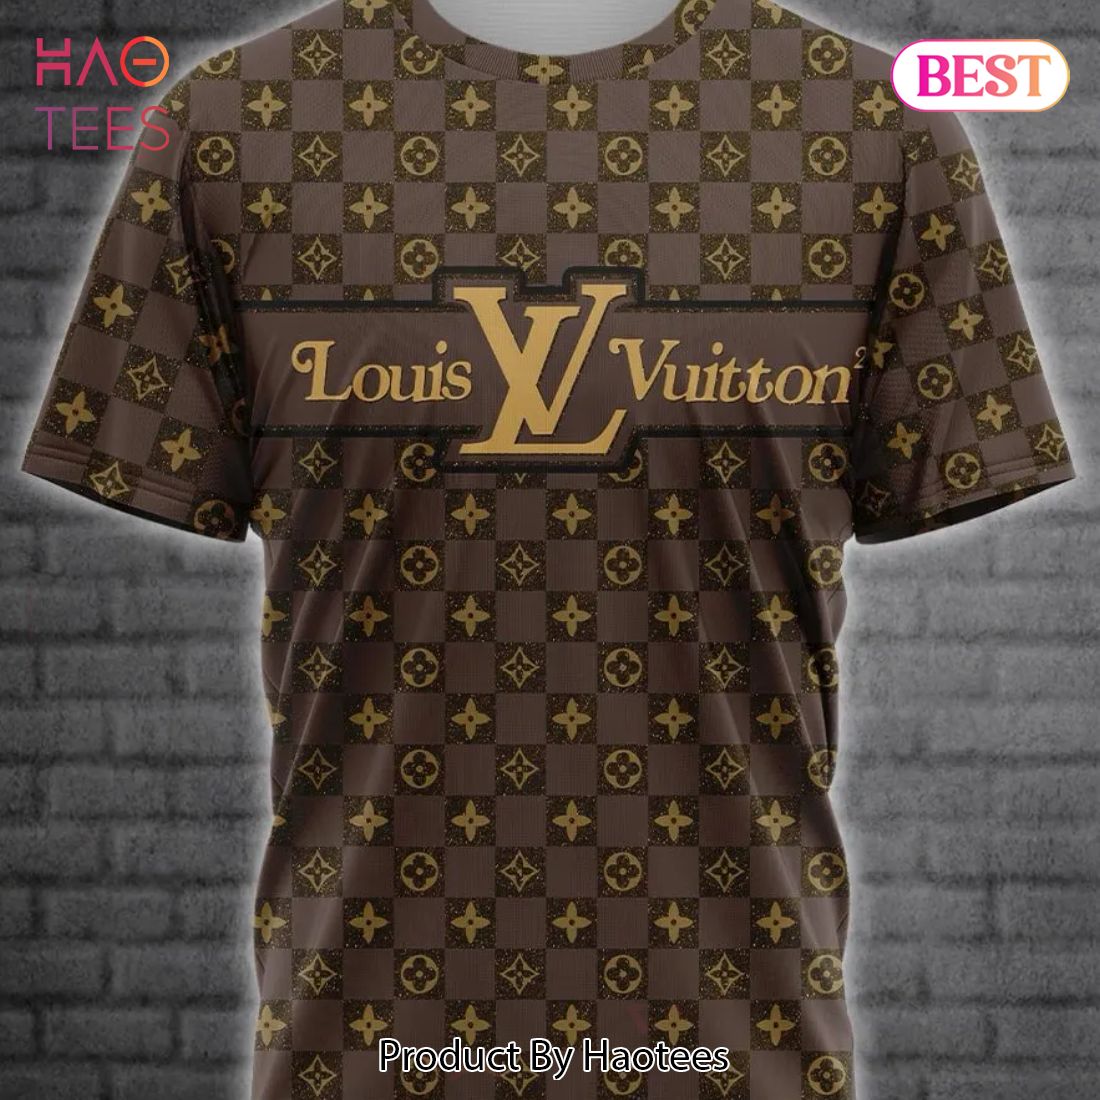 NEW FASHION] Louis Vuitton Monogram Luxury Brand T-Shirt Outfit